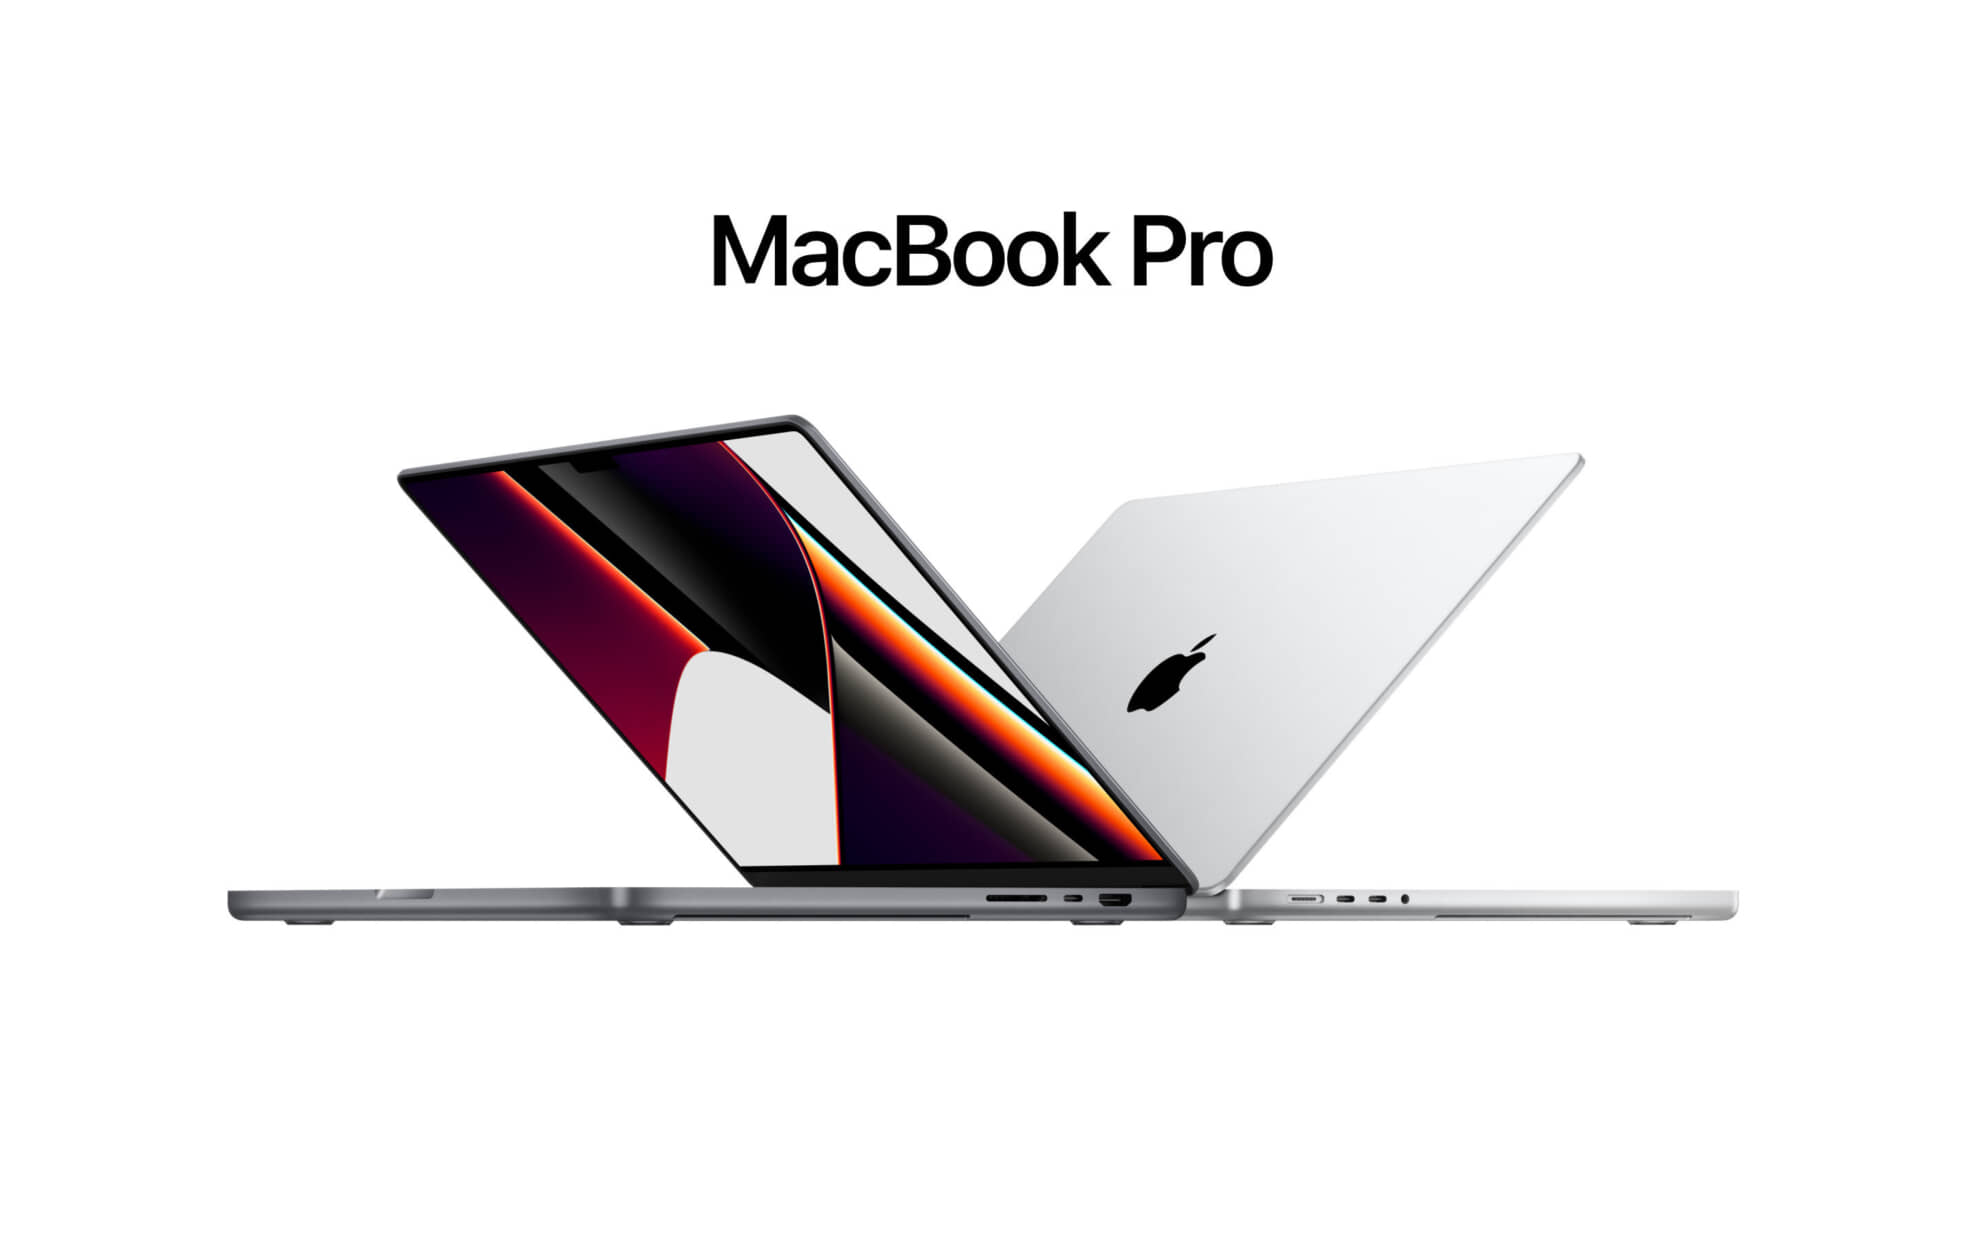 tin-tuc/apple-macbook-pro-14-inch-va-16-inch-se-ra-mat-vao-thang-11.html